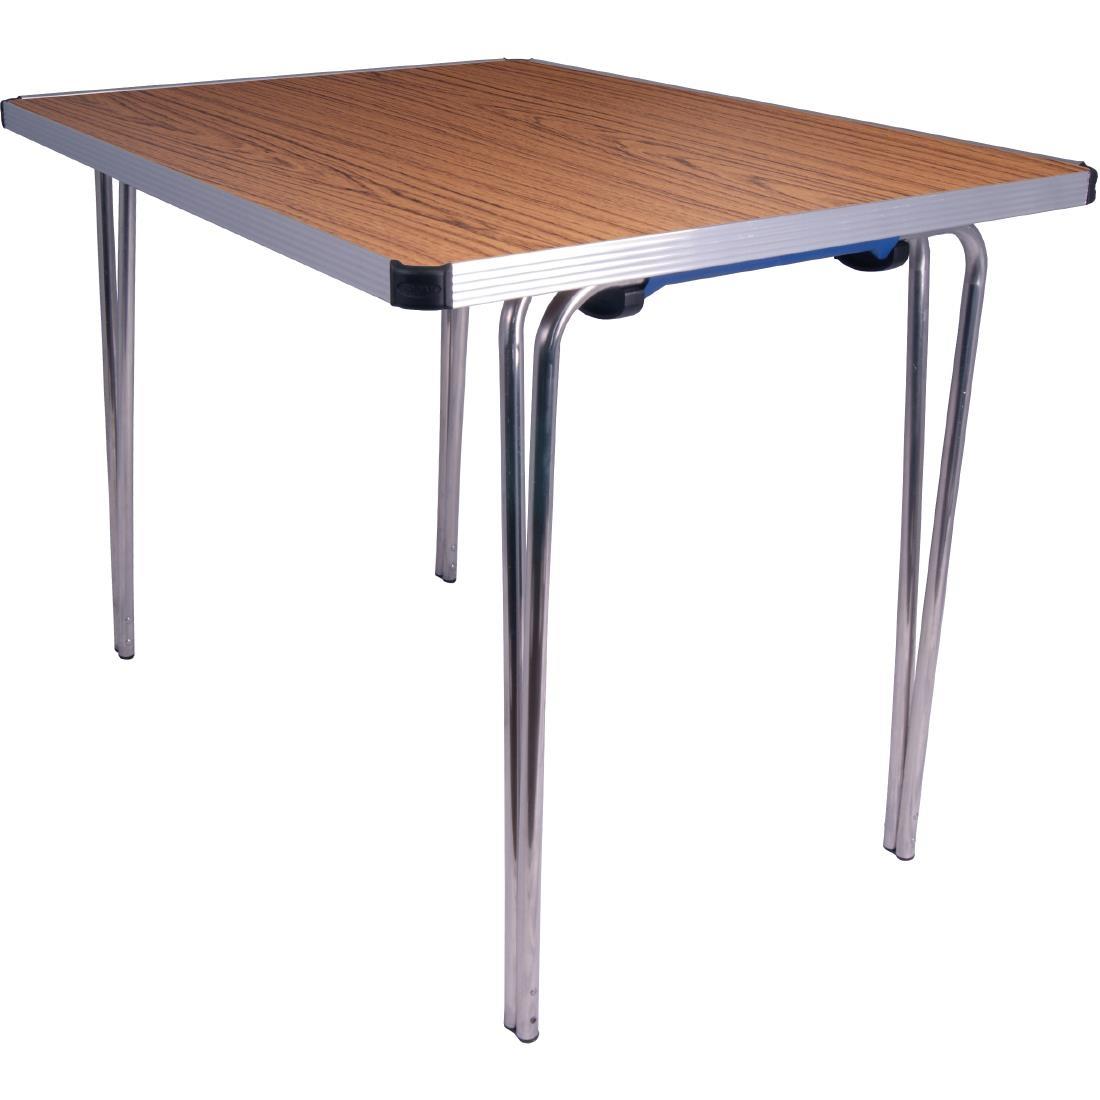 Gopak Contour Folding Table Teak 3ft - DM695  - 1